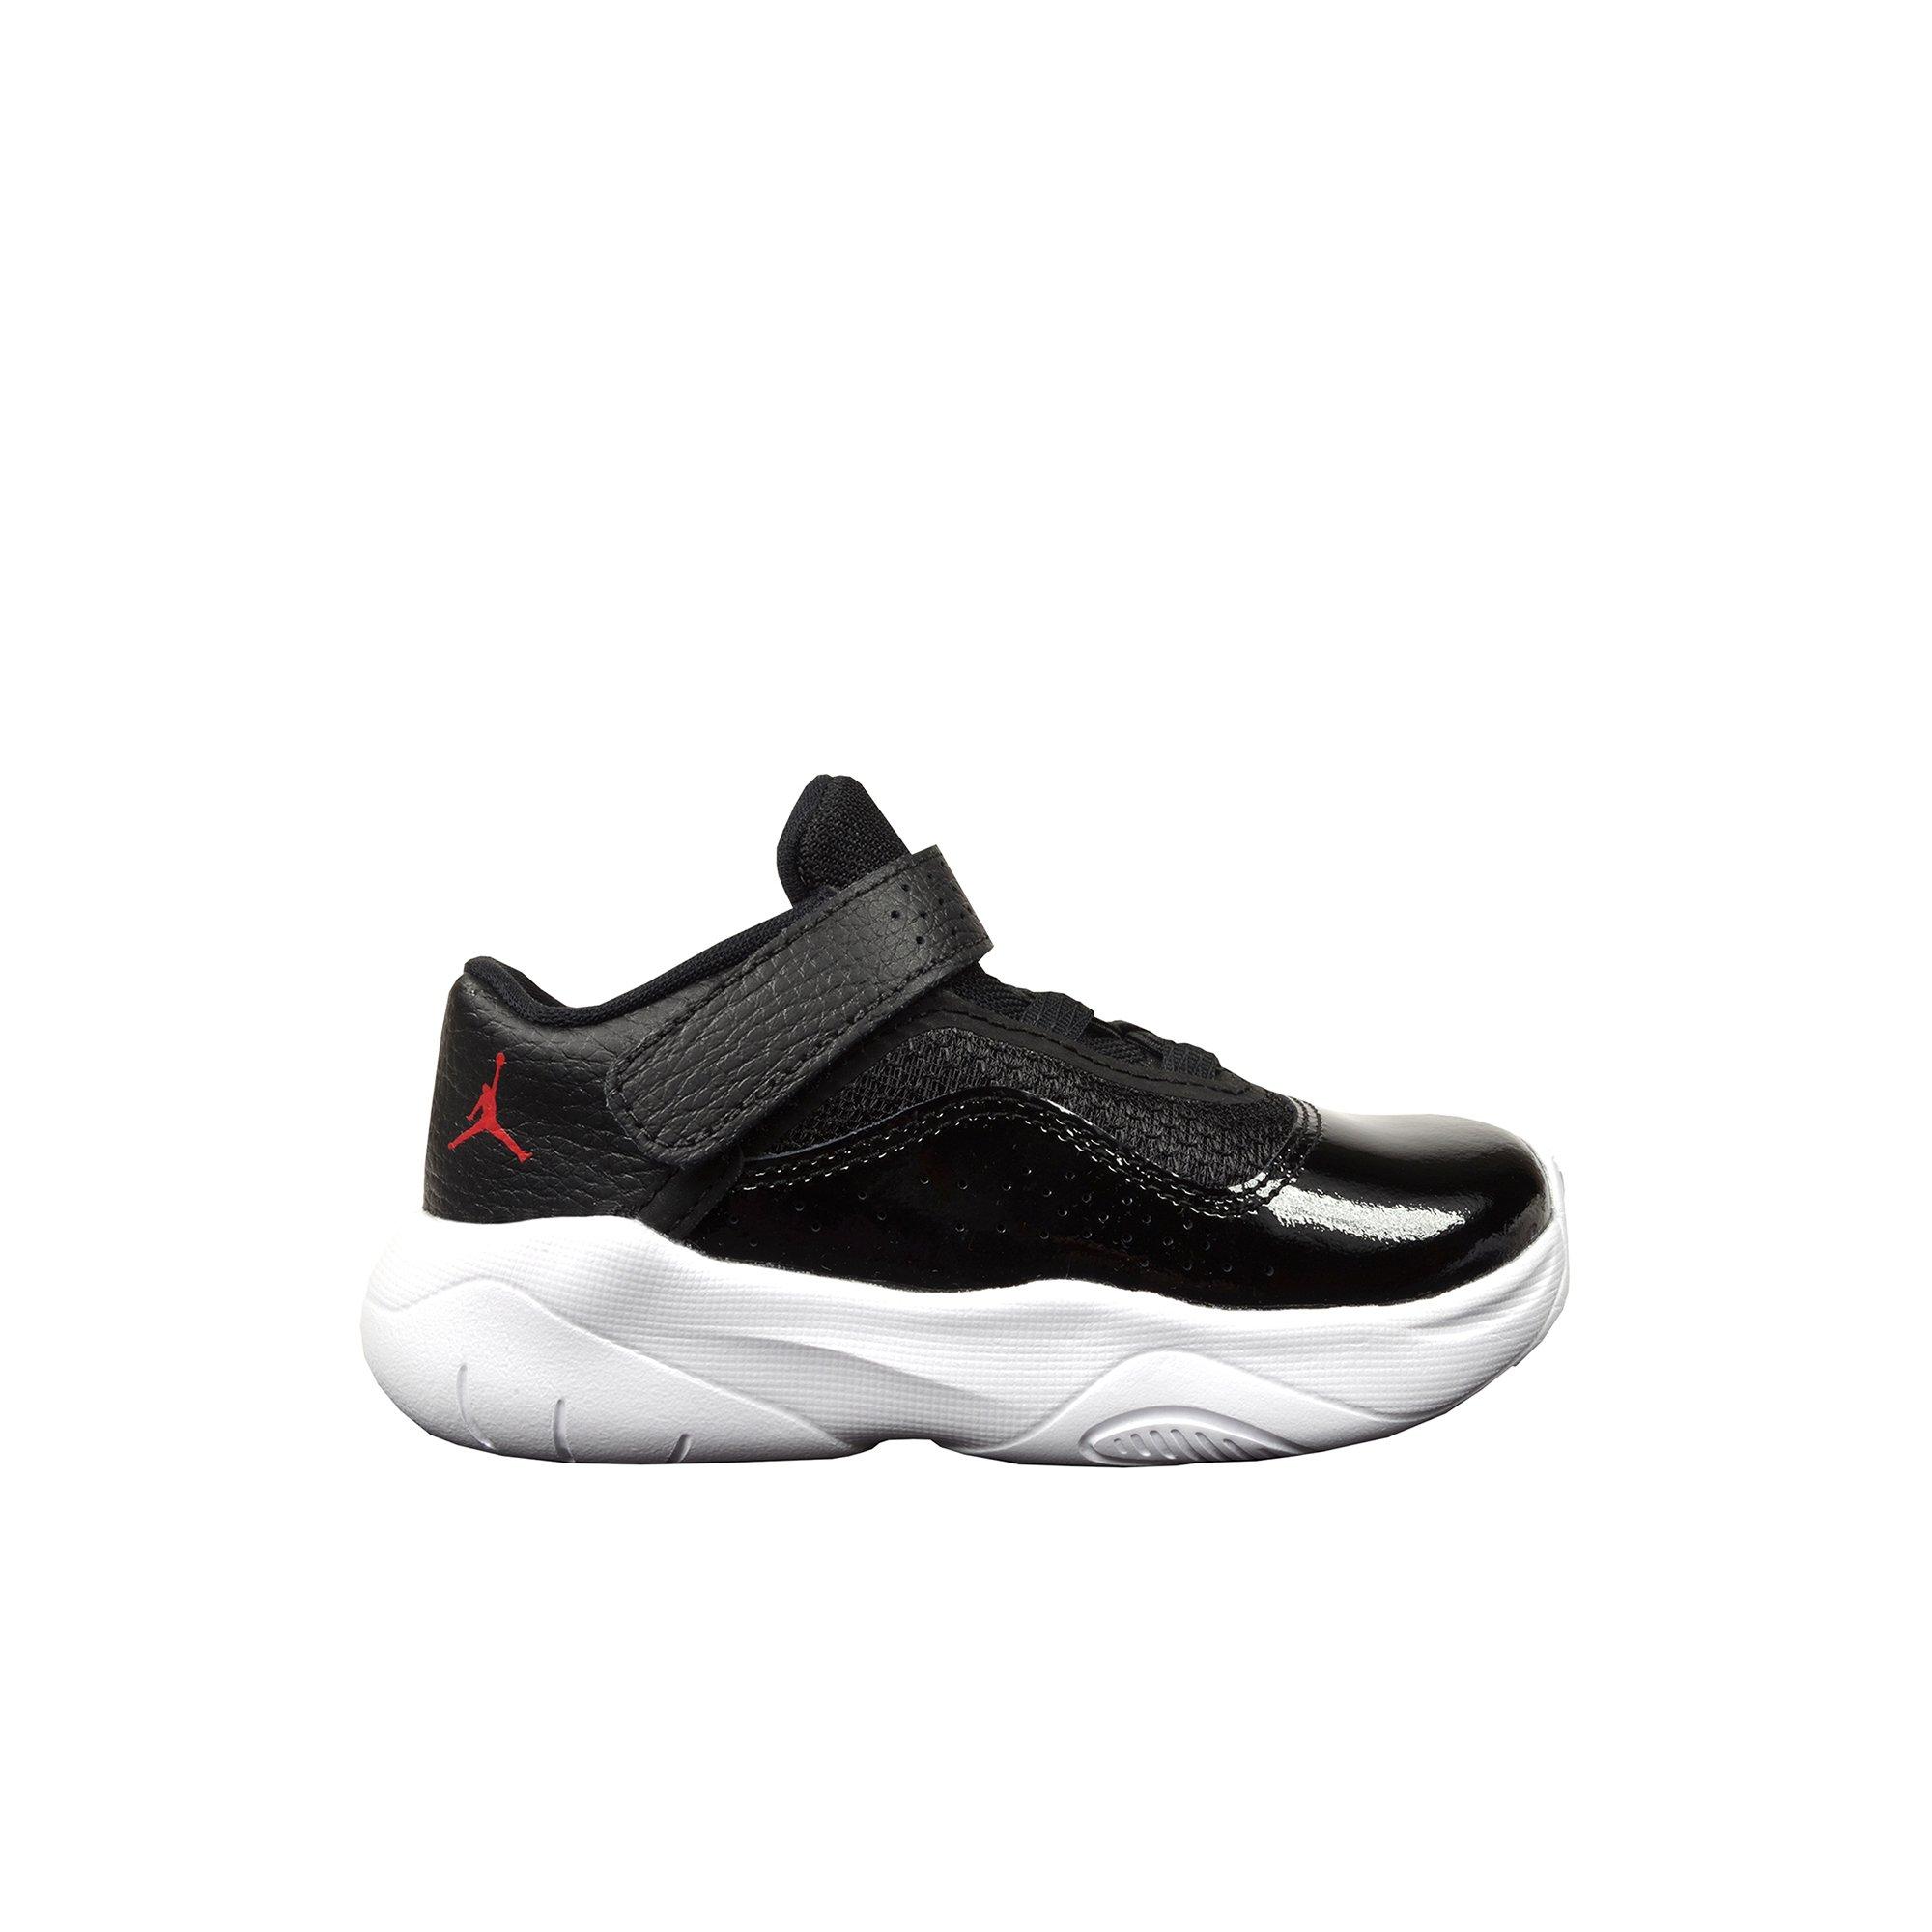 Michael Jordan Air Jordan 11 CMFT Low (GS) Big Kids' Shoes  Black-Concord-White dx3732-001